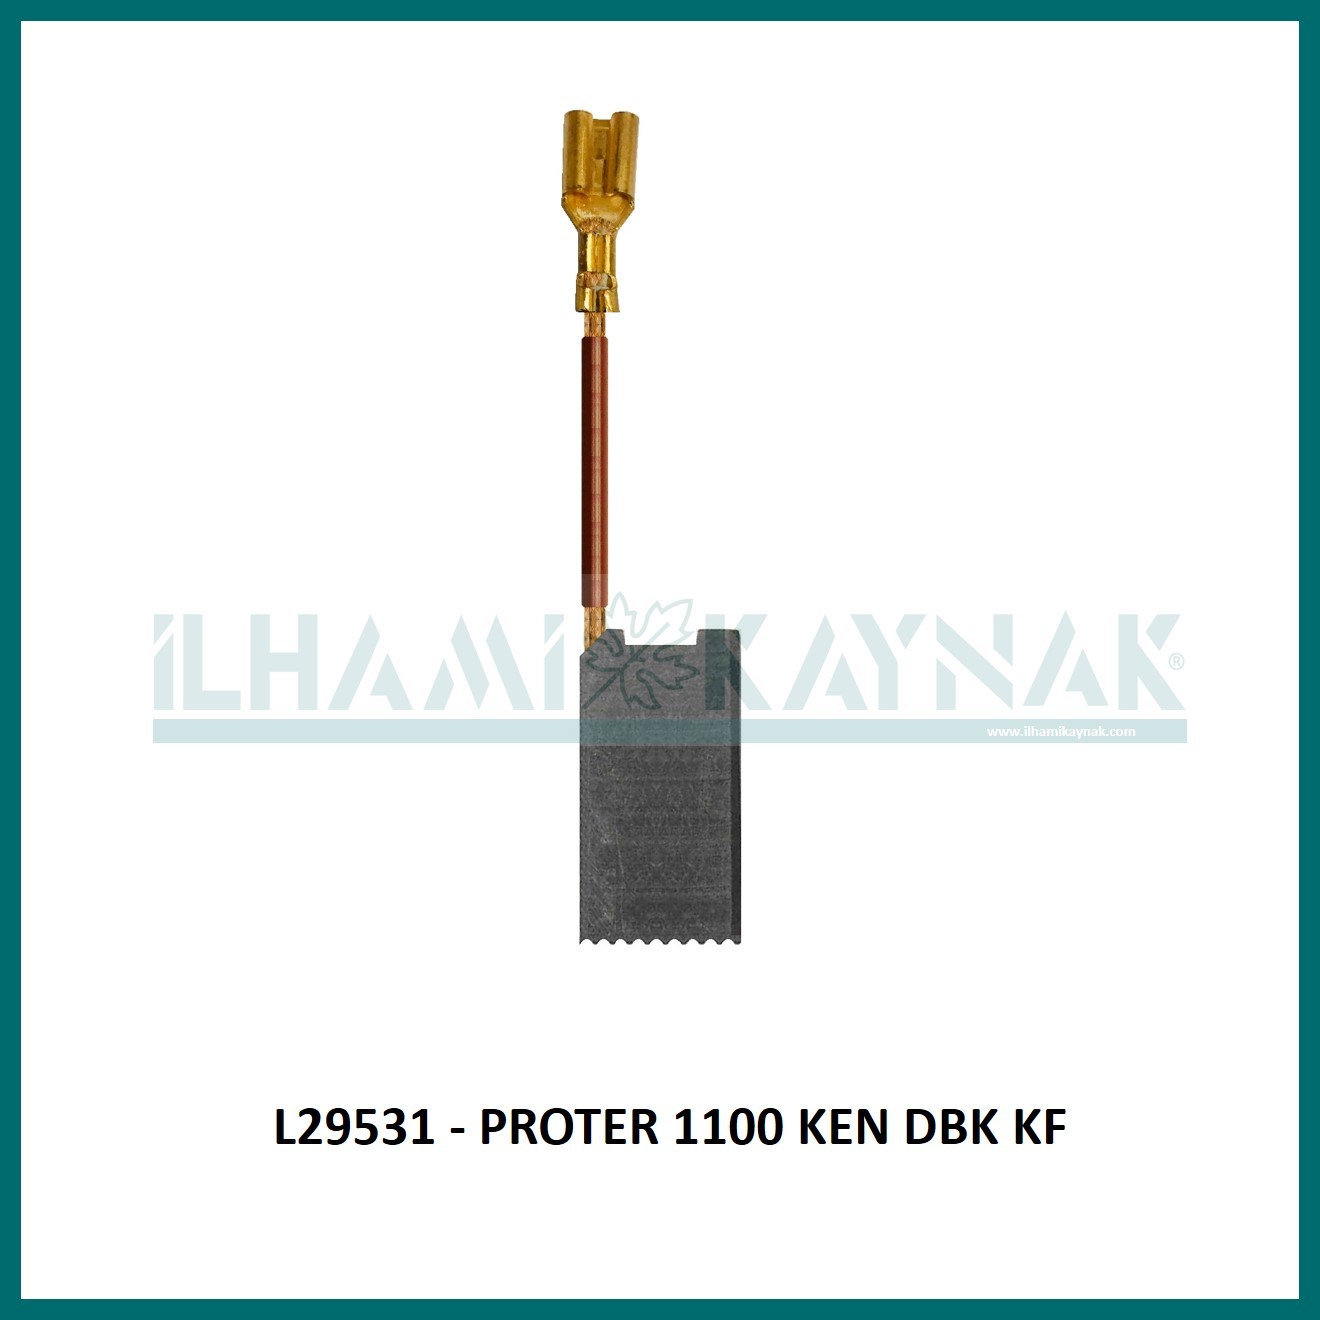 L29531 - PROTER 1100 KEN DBK KF 6*12*18 mm - Minimum Satın Alım: 10 Adet